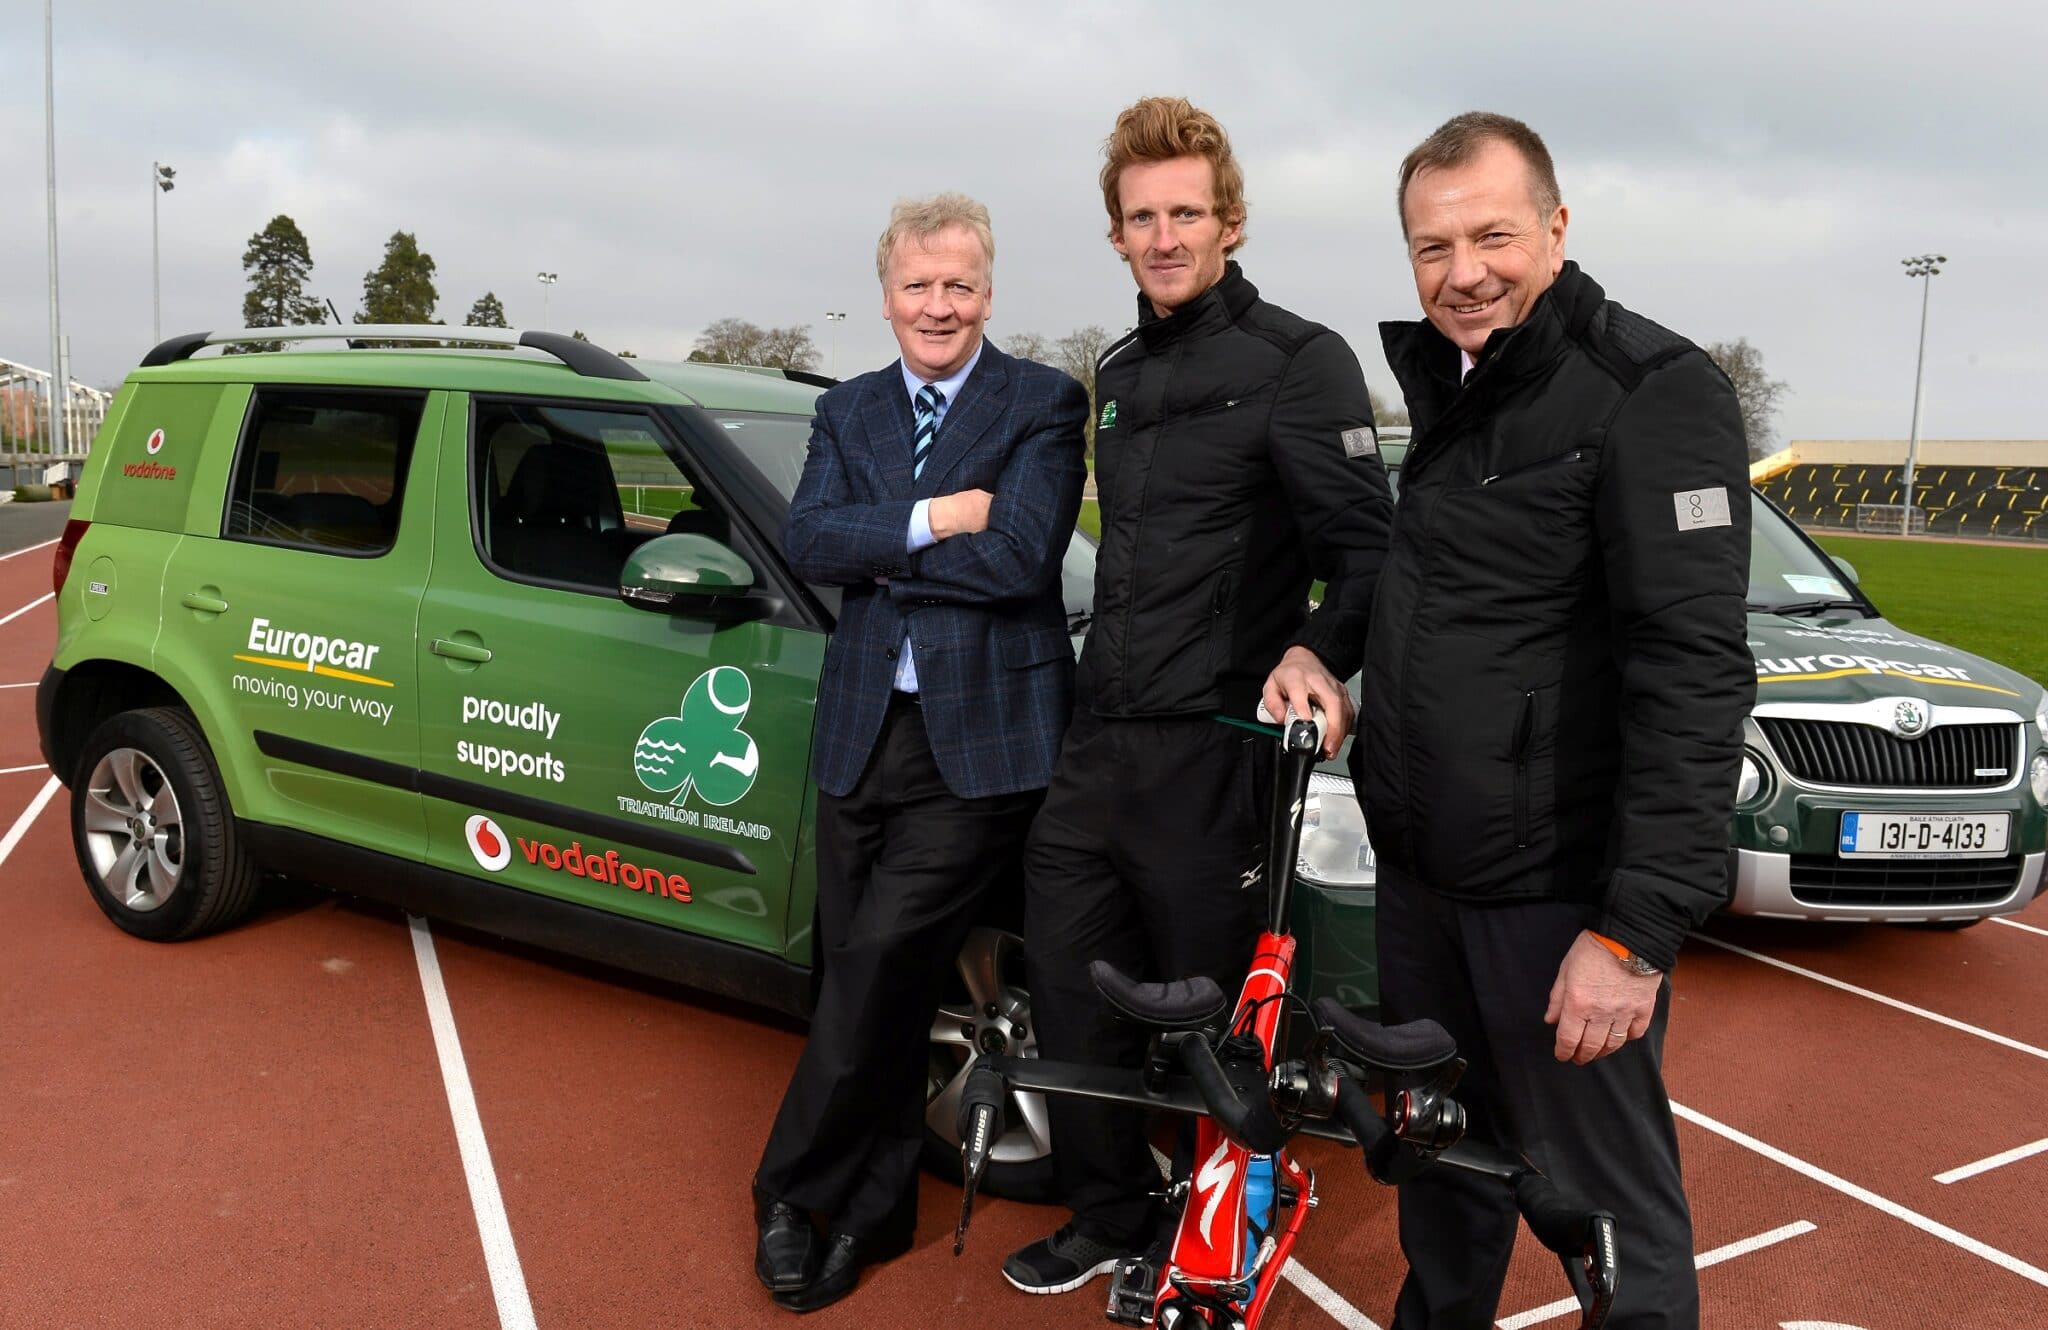 Triathlon Secures Europcar Deal - Sport for Business